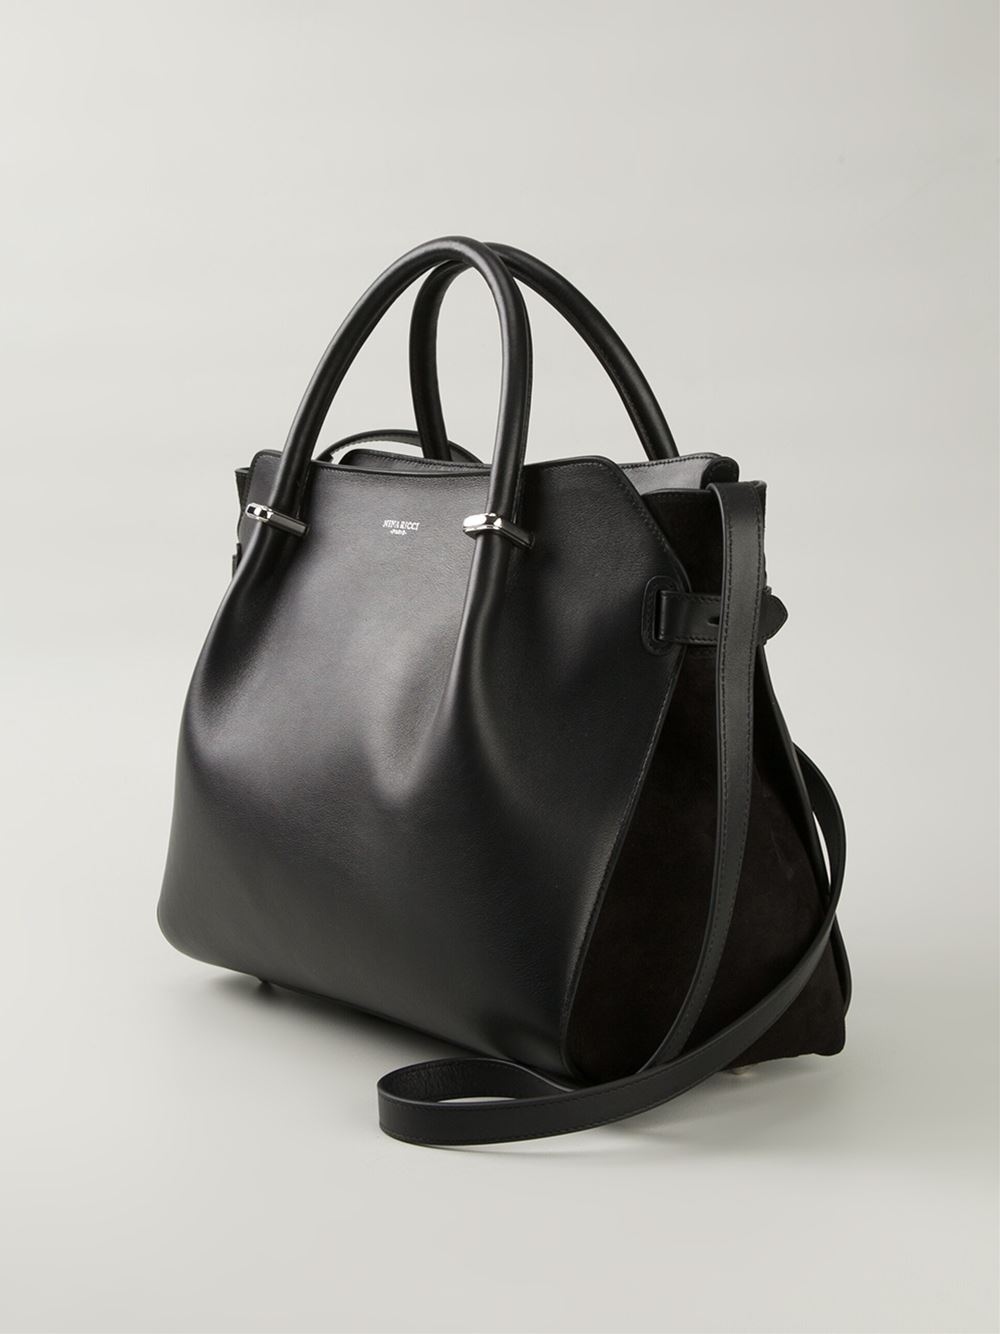 Lyst - Nina Ricci Small 'Marche' Bag in Black